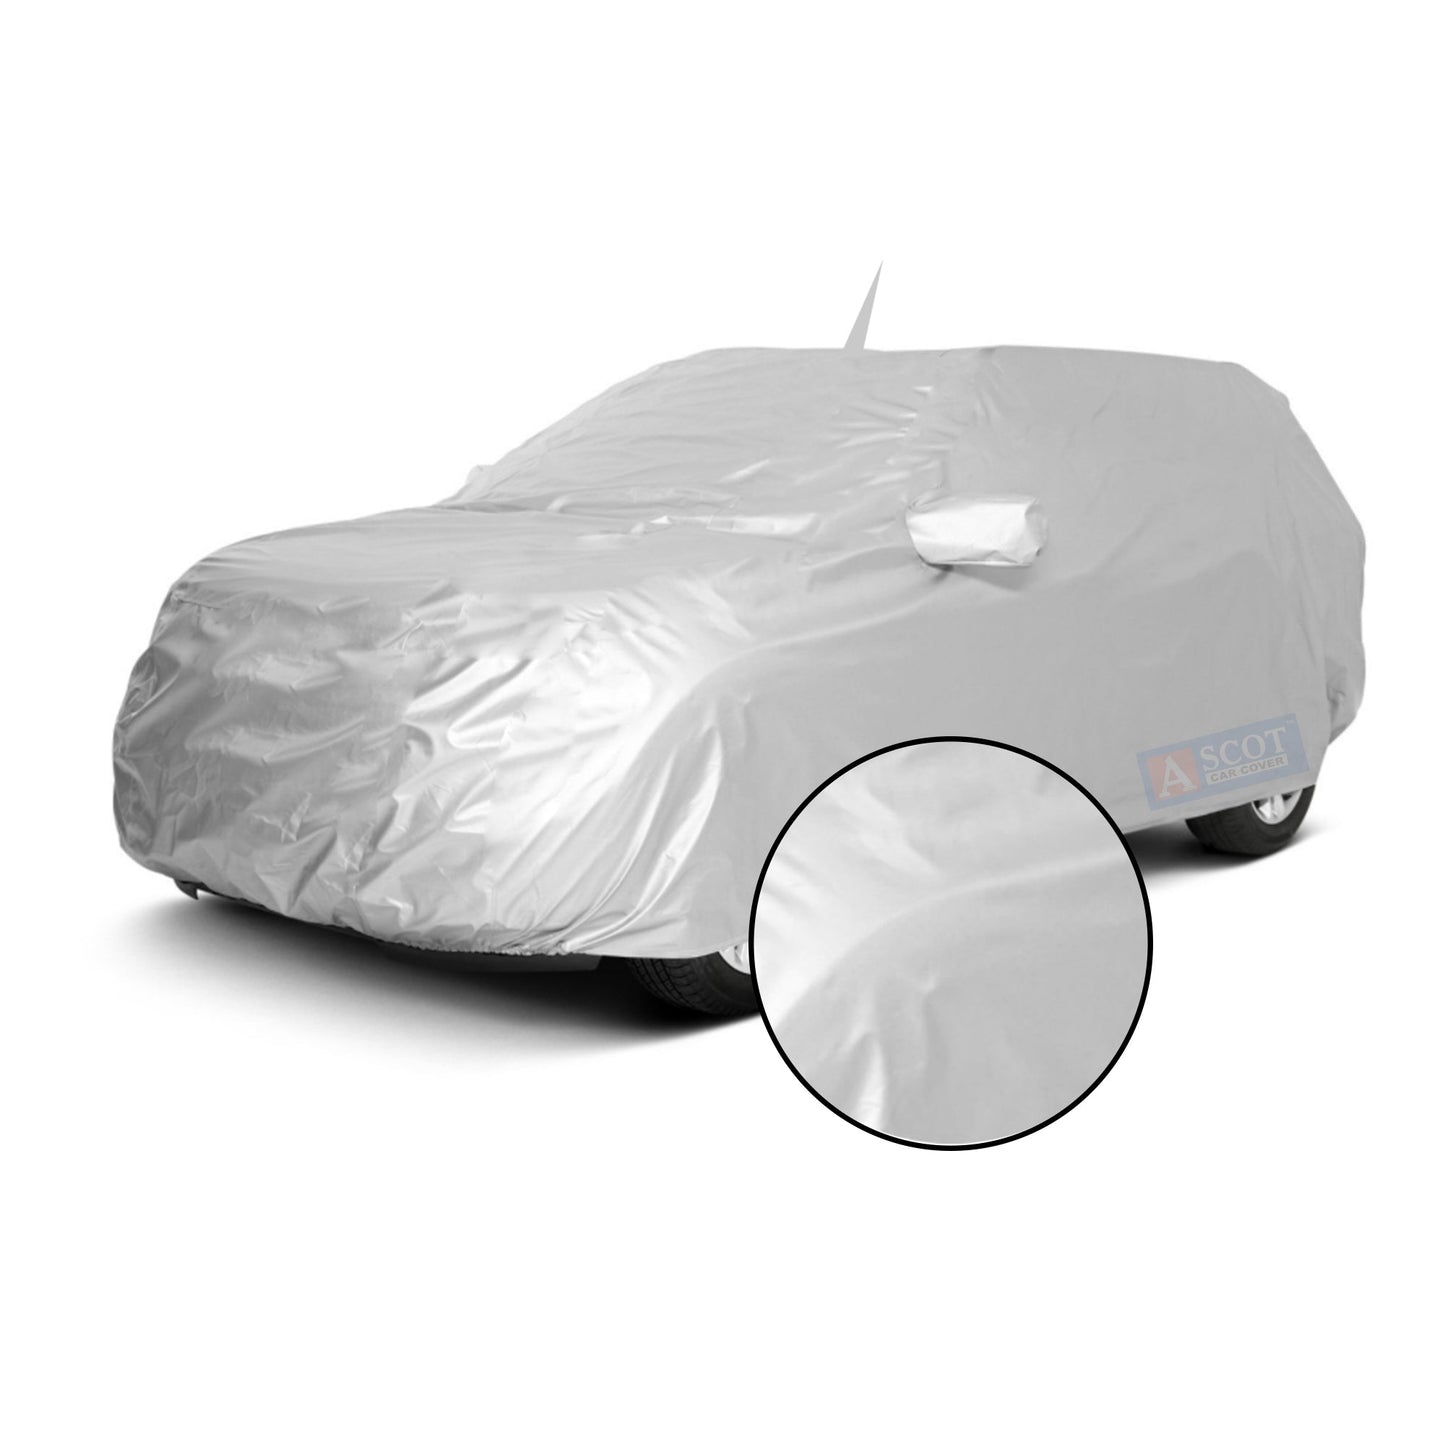 Ascot Maruti Suzuki Nexa Ignis Car Body Cover Dust Proof, Trippel Stitched